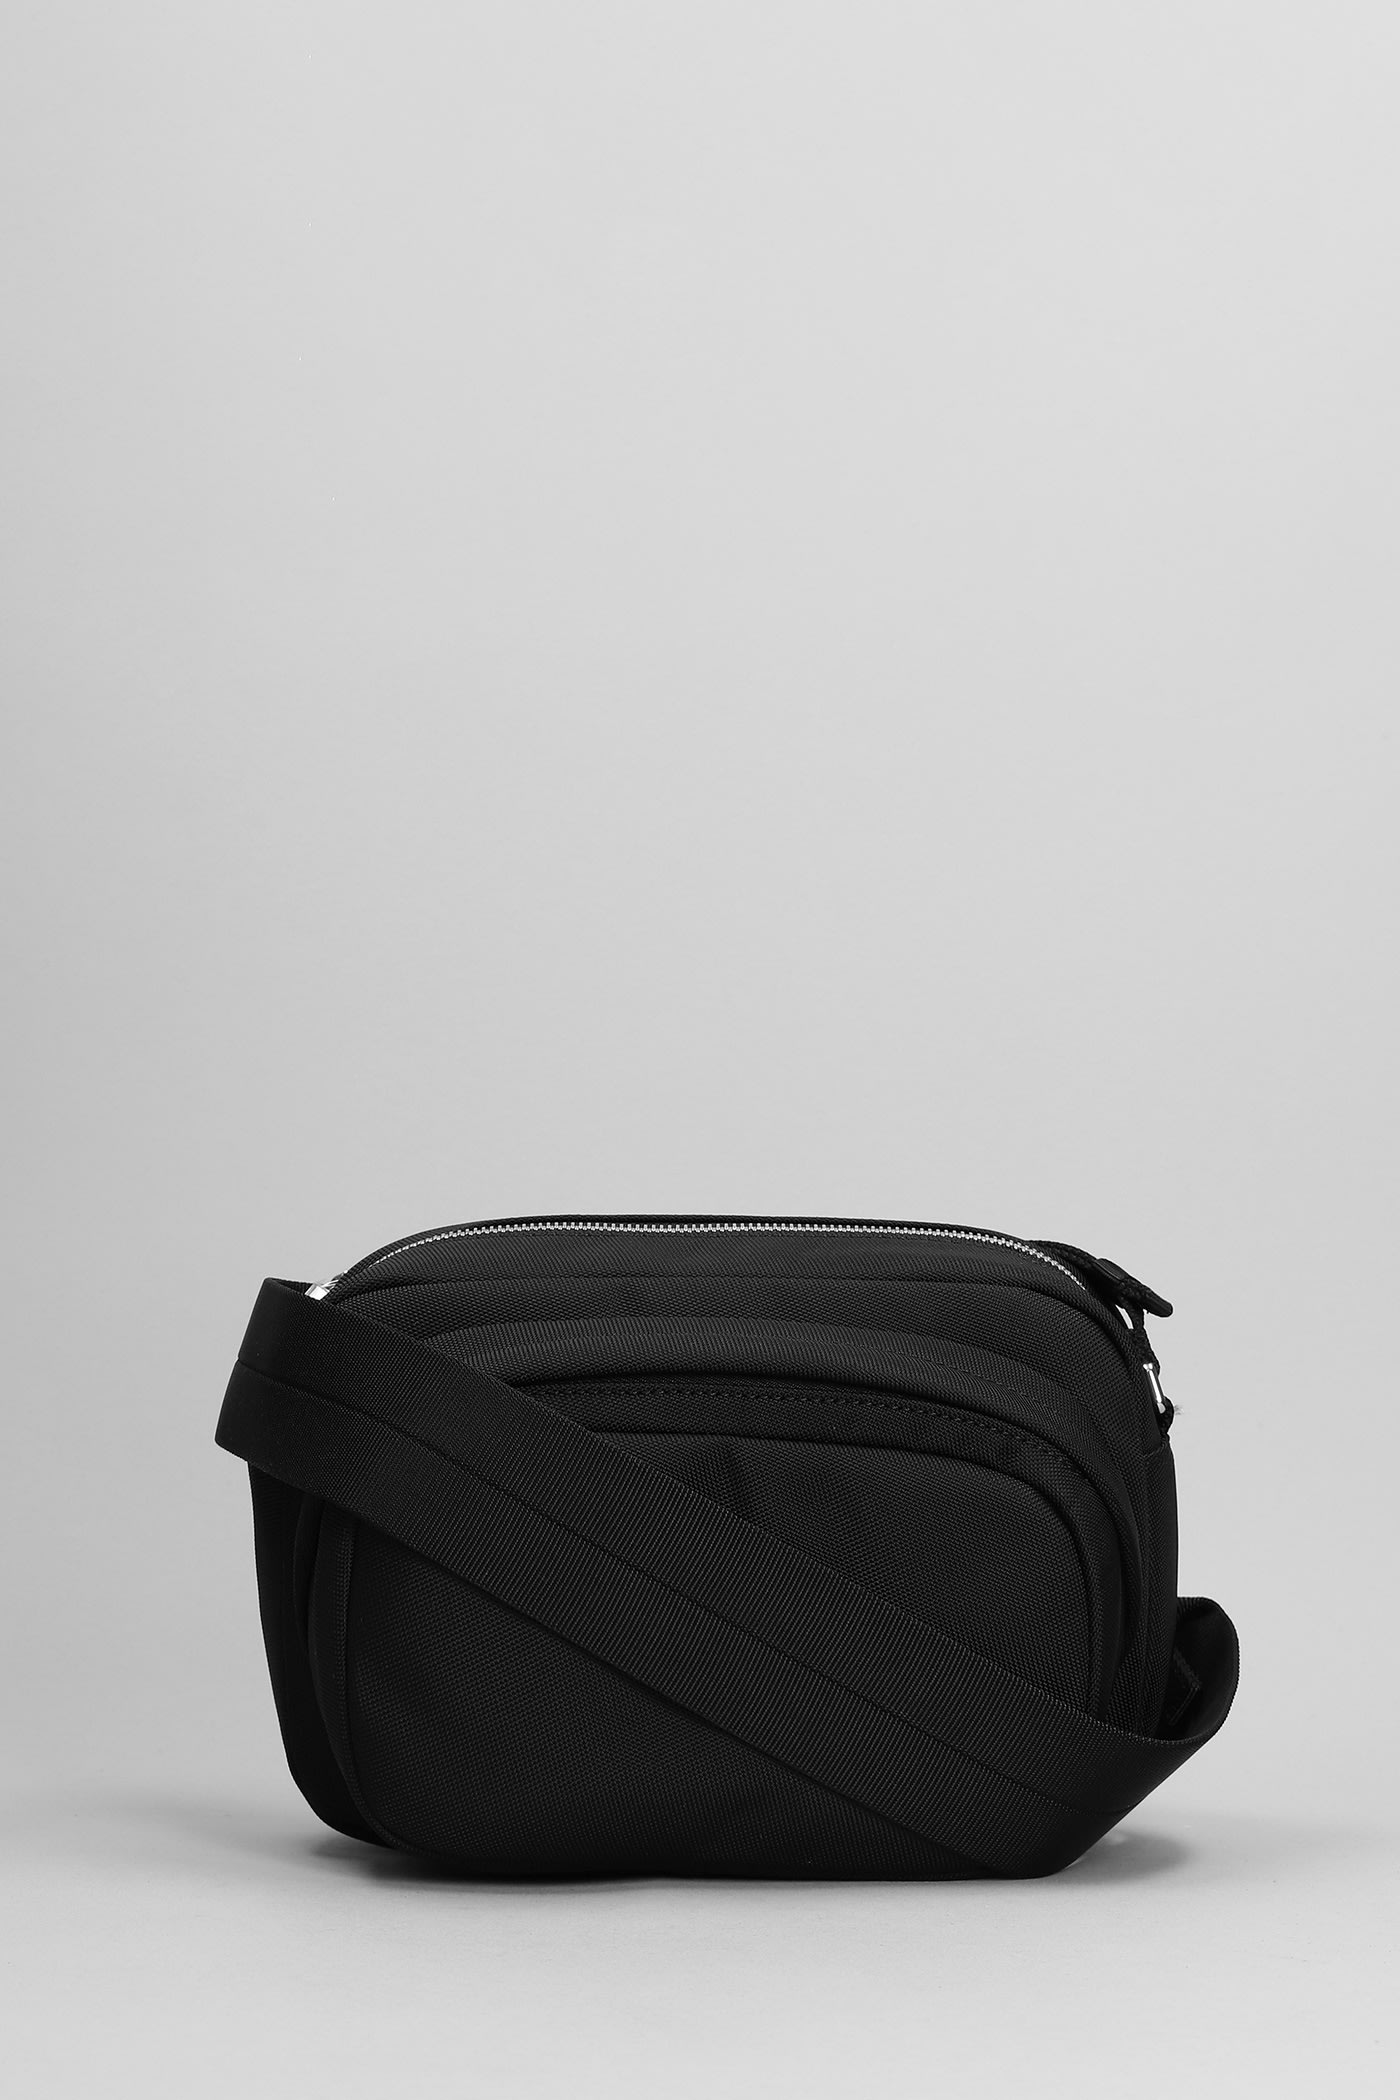 Heiress Sport Small Shoulder Bag In Black Nylon